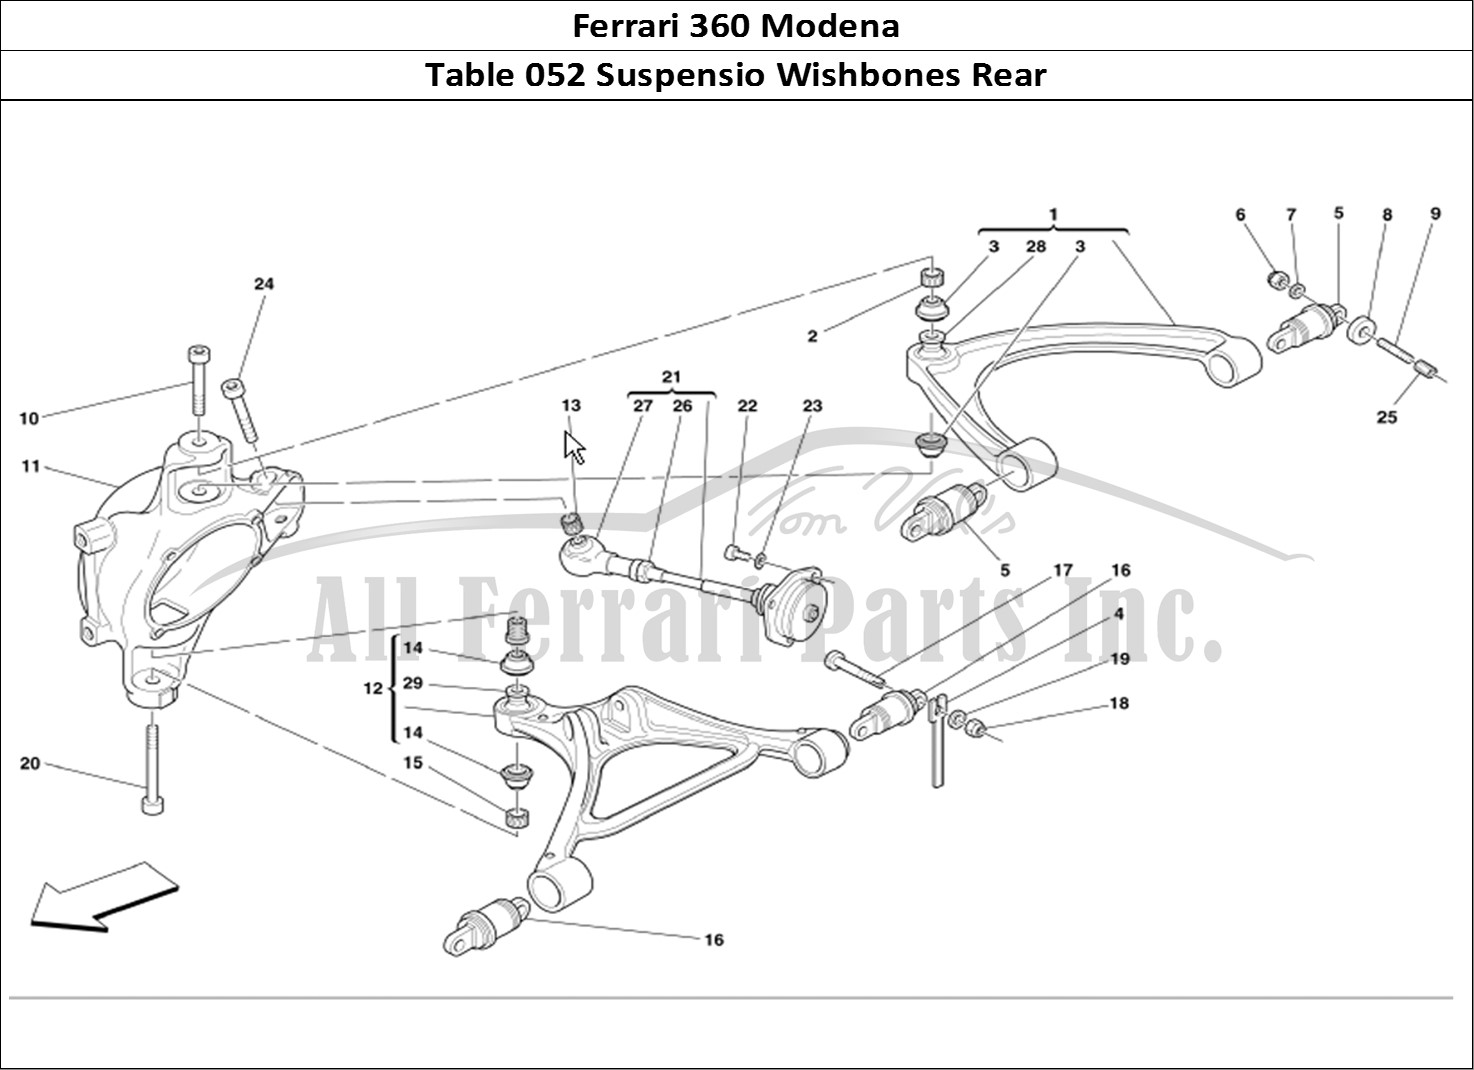 Ferrari Parts Ferrari 360 Modena Page 052 Rear Suspension Wishbones